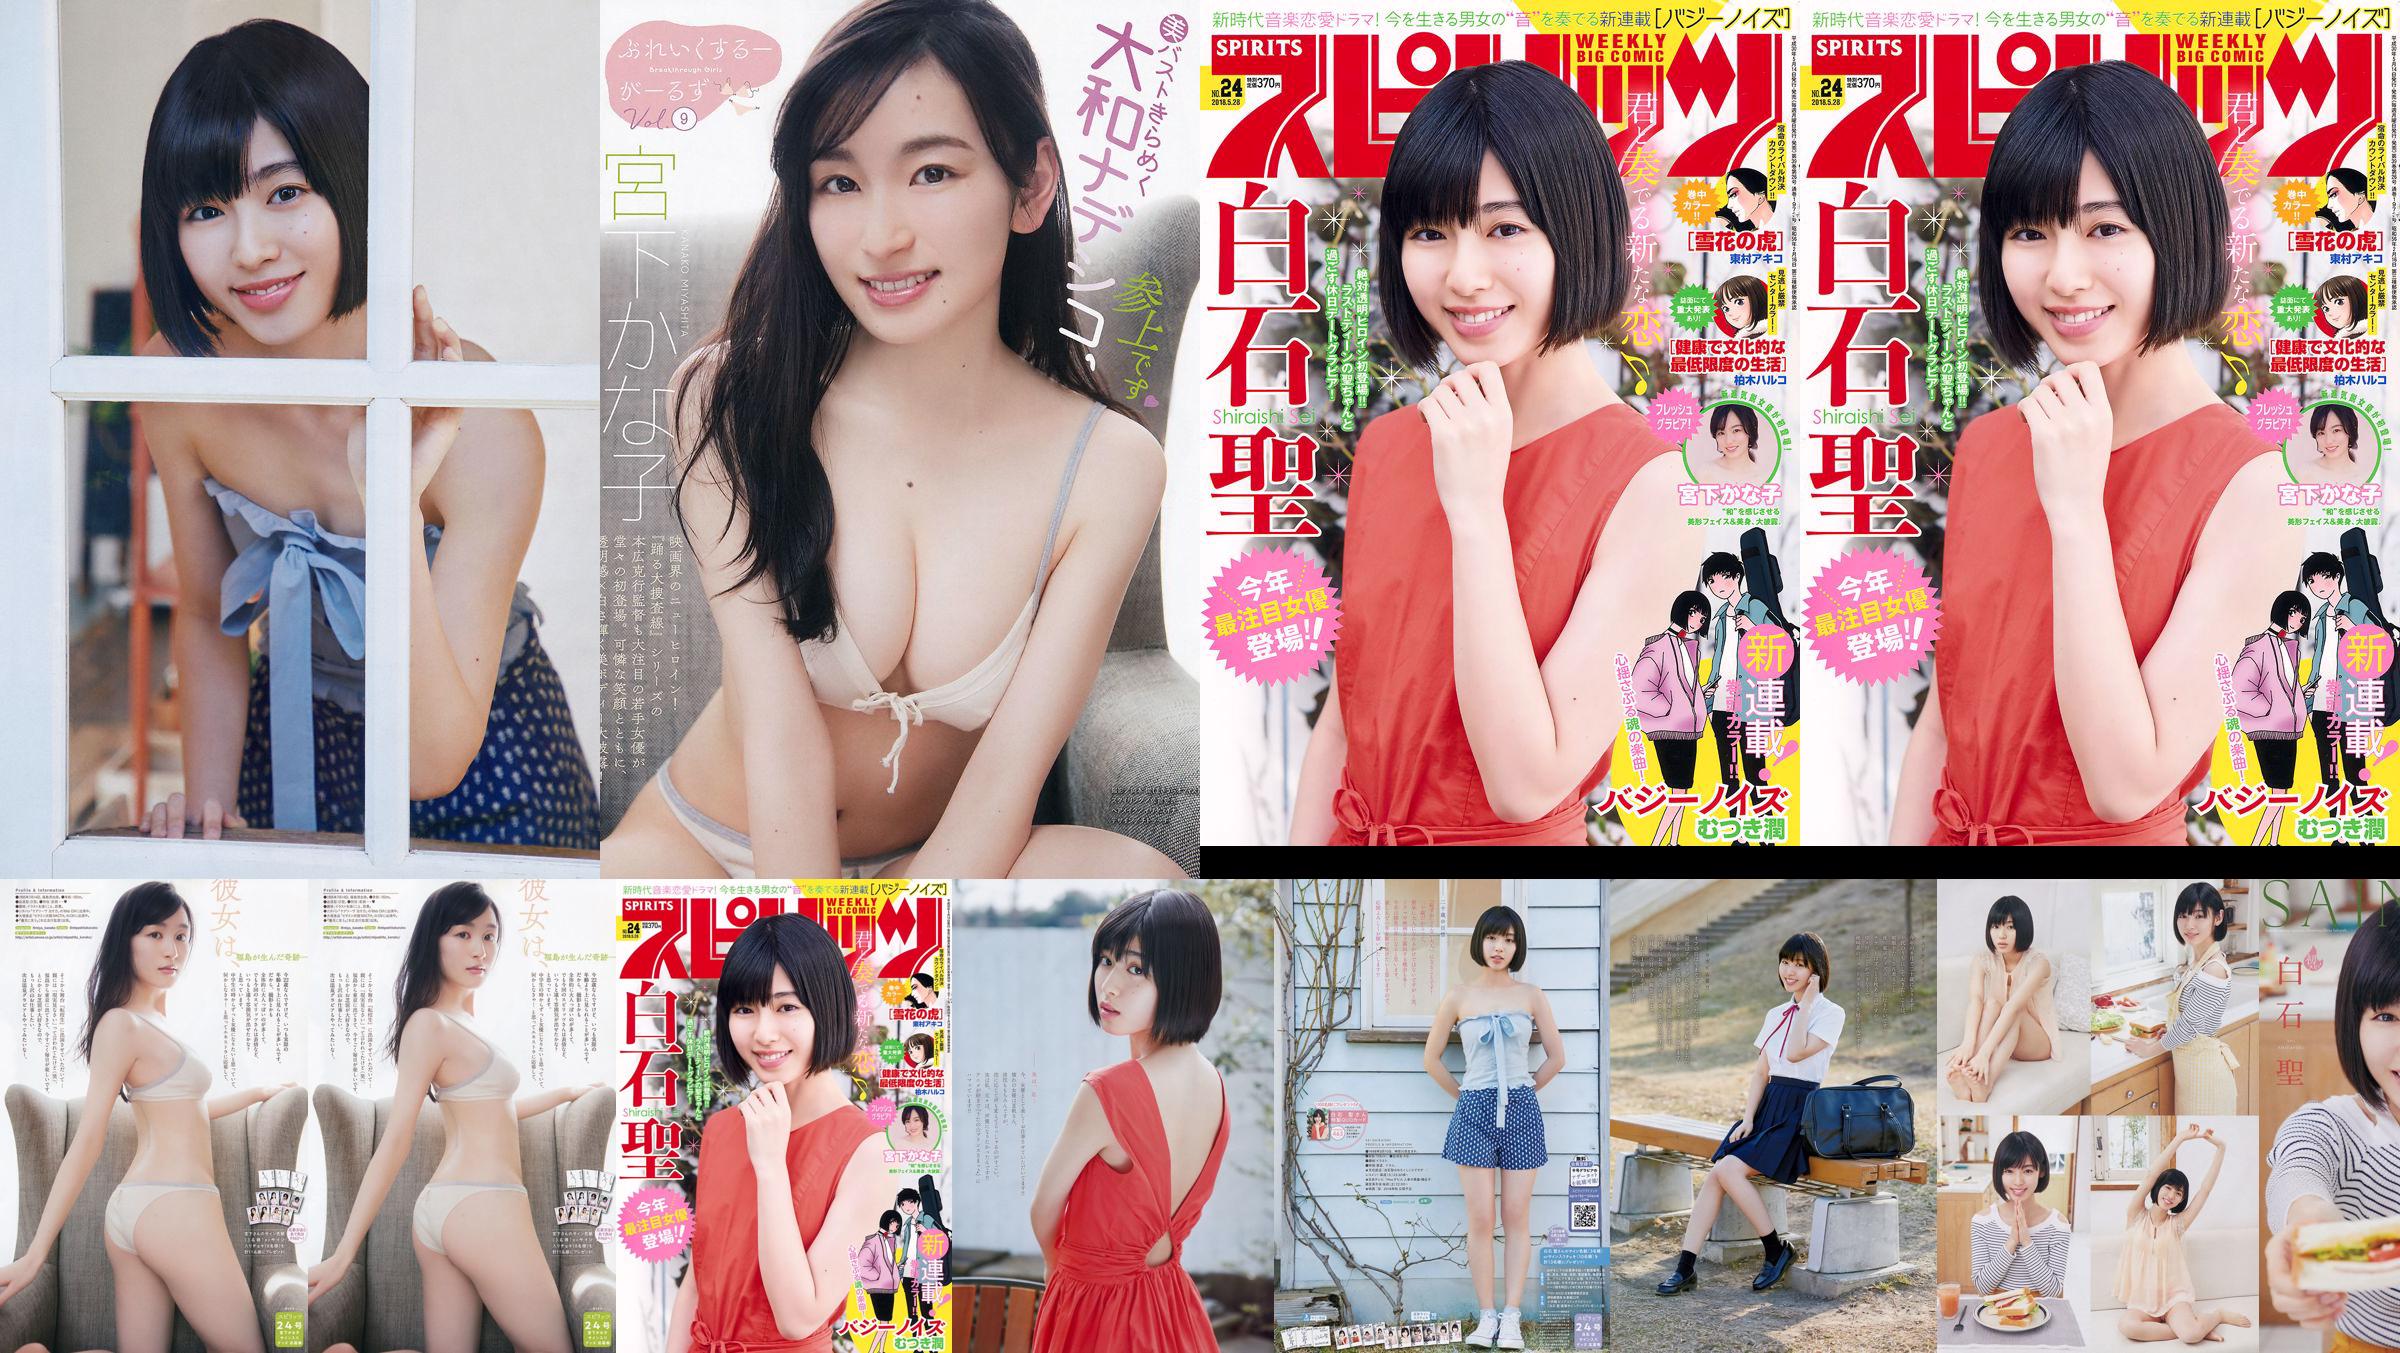 Yuria Kizaki Nana Okada AKB48 Under Girls [Saut hebdomadaire des jeunes] 2015 No.36-37 Photographie No.edb52f Page 1